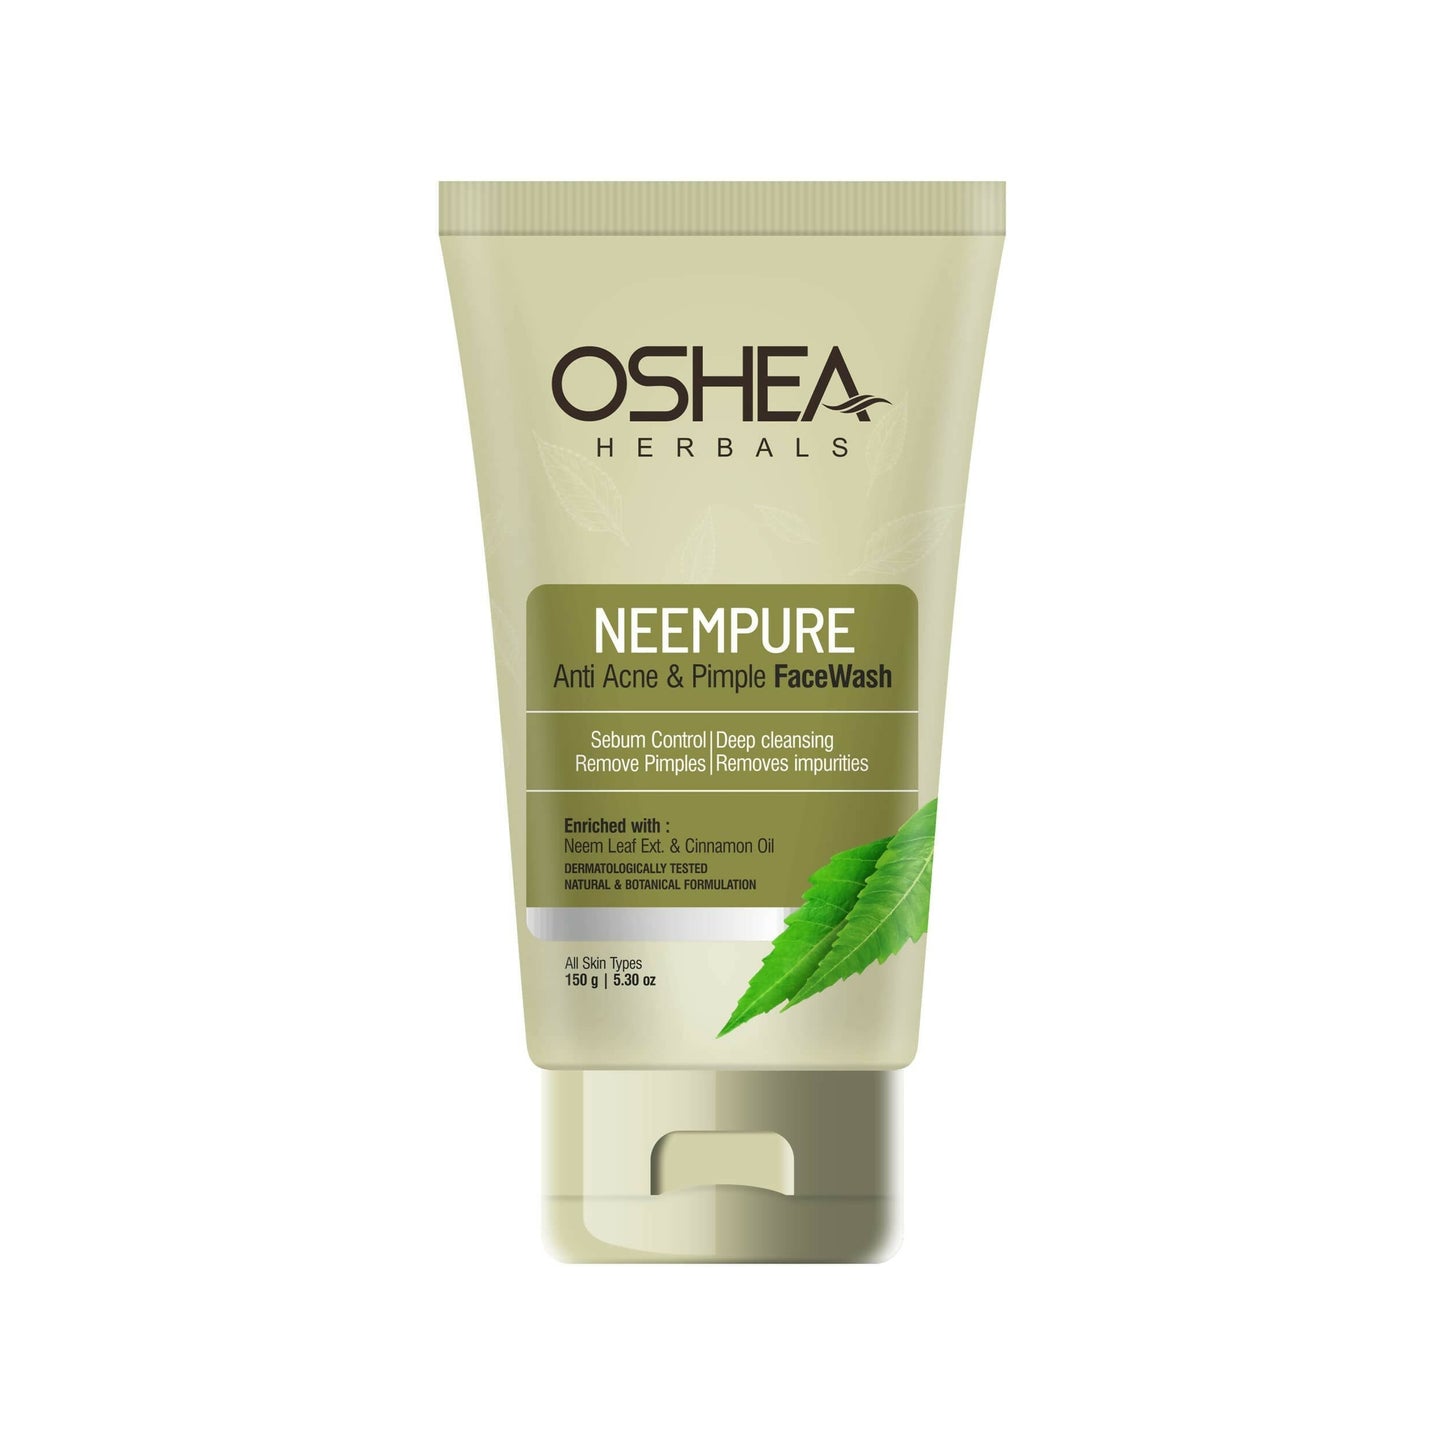 Oshea Herbals Neempure Anti Acne & Pimple Face Wash - usa canada australia